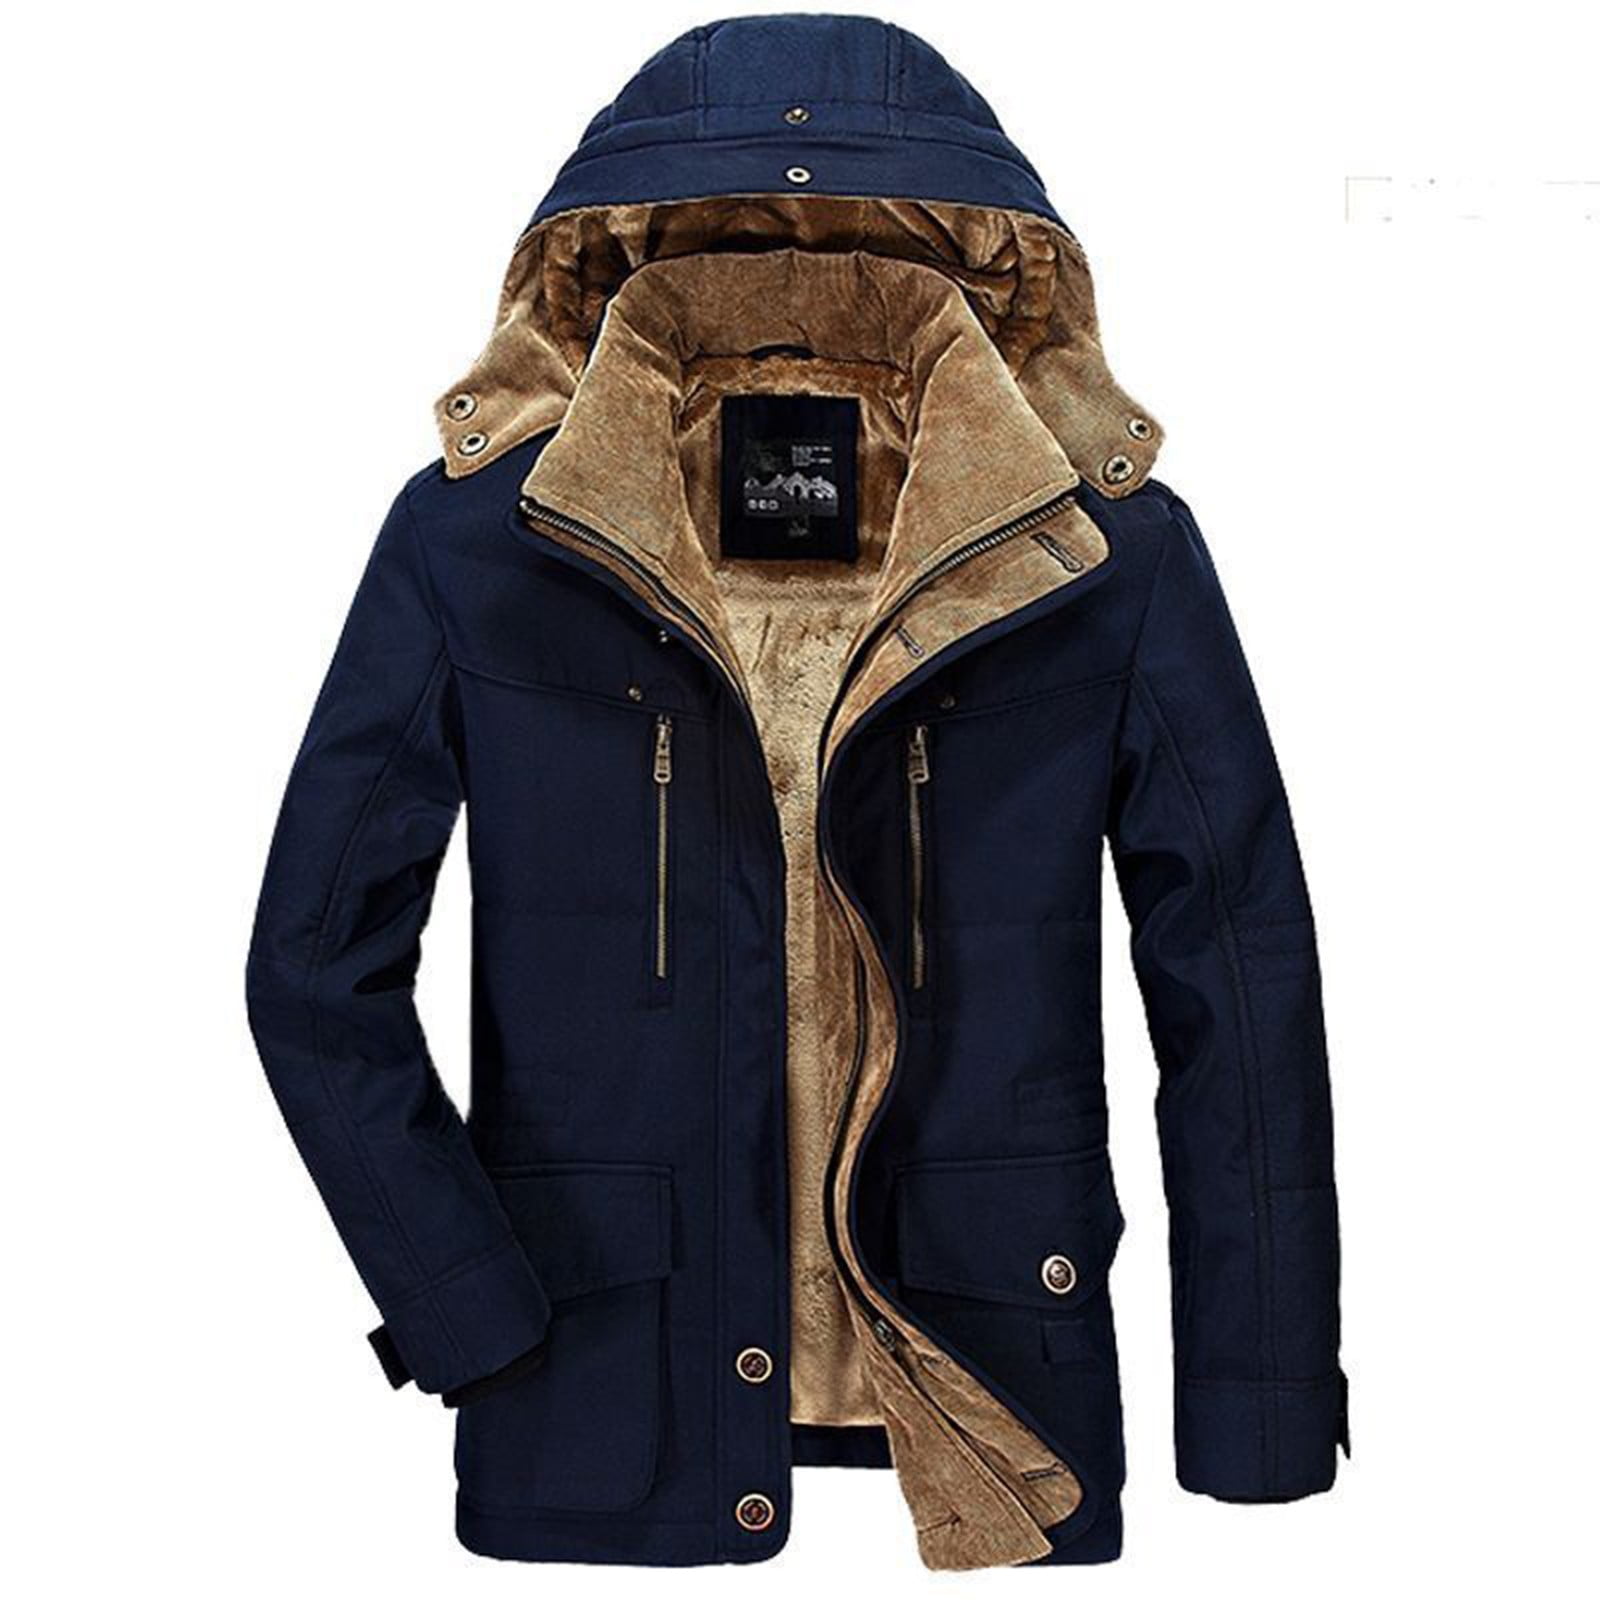 TQWQT Men's Winter Warm Parka Jacket Sherpa Lined Cotton Coat with  Detachable Hood